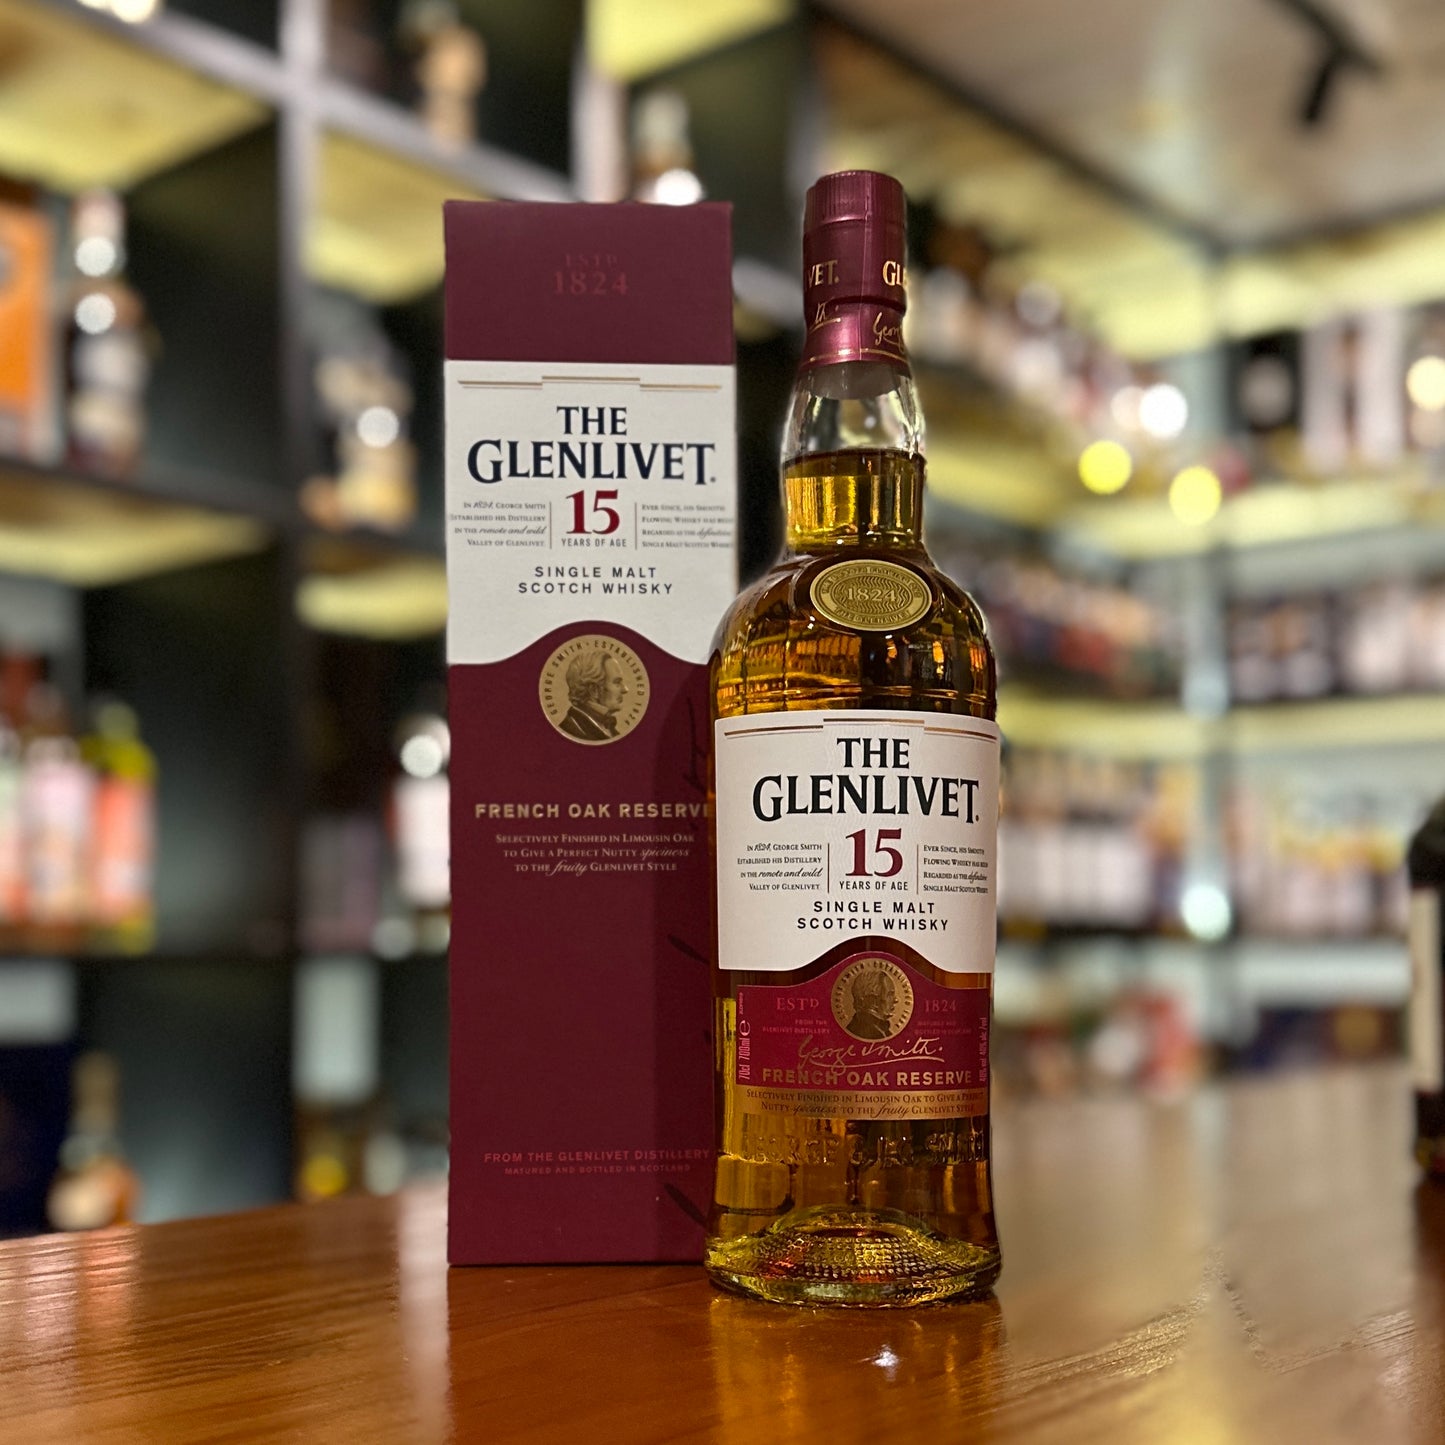 Glenlivet 15 Year Old French Oak Reserve Single Malt Scotch Whisky